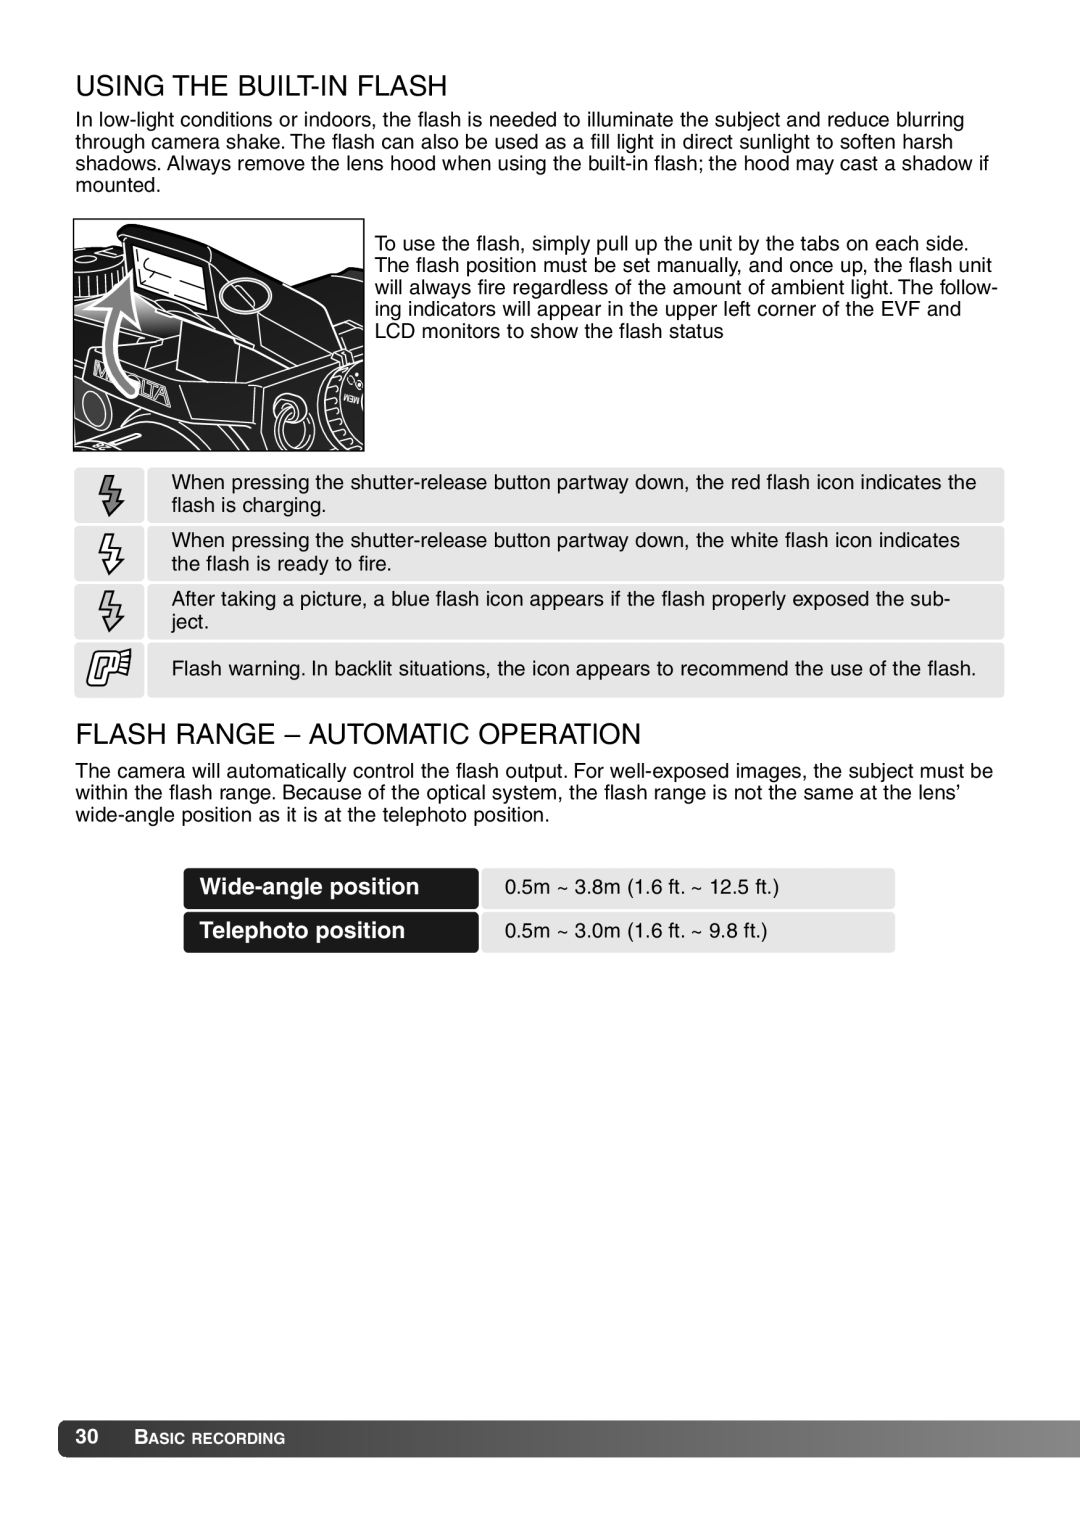 Konica Minolta 7Hi instruction manual Using the BUILT-IN Flash, Flash Range Automatic Operation 